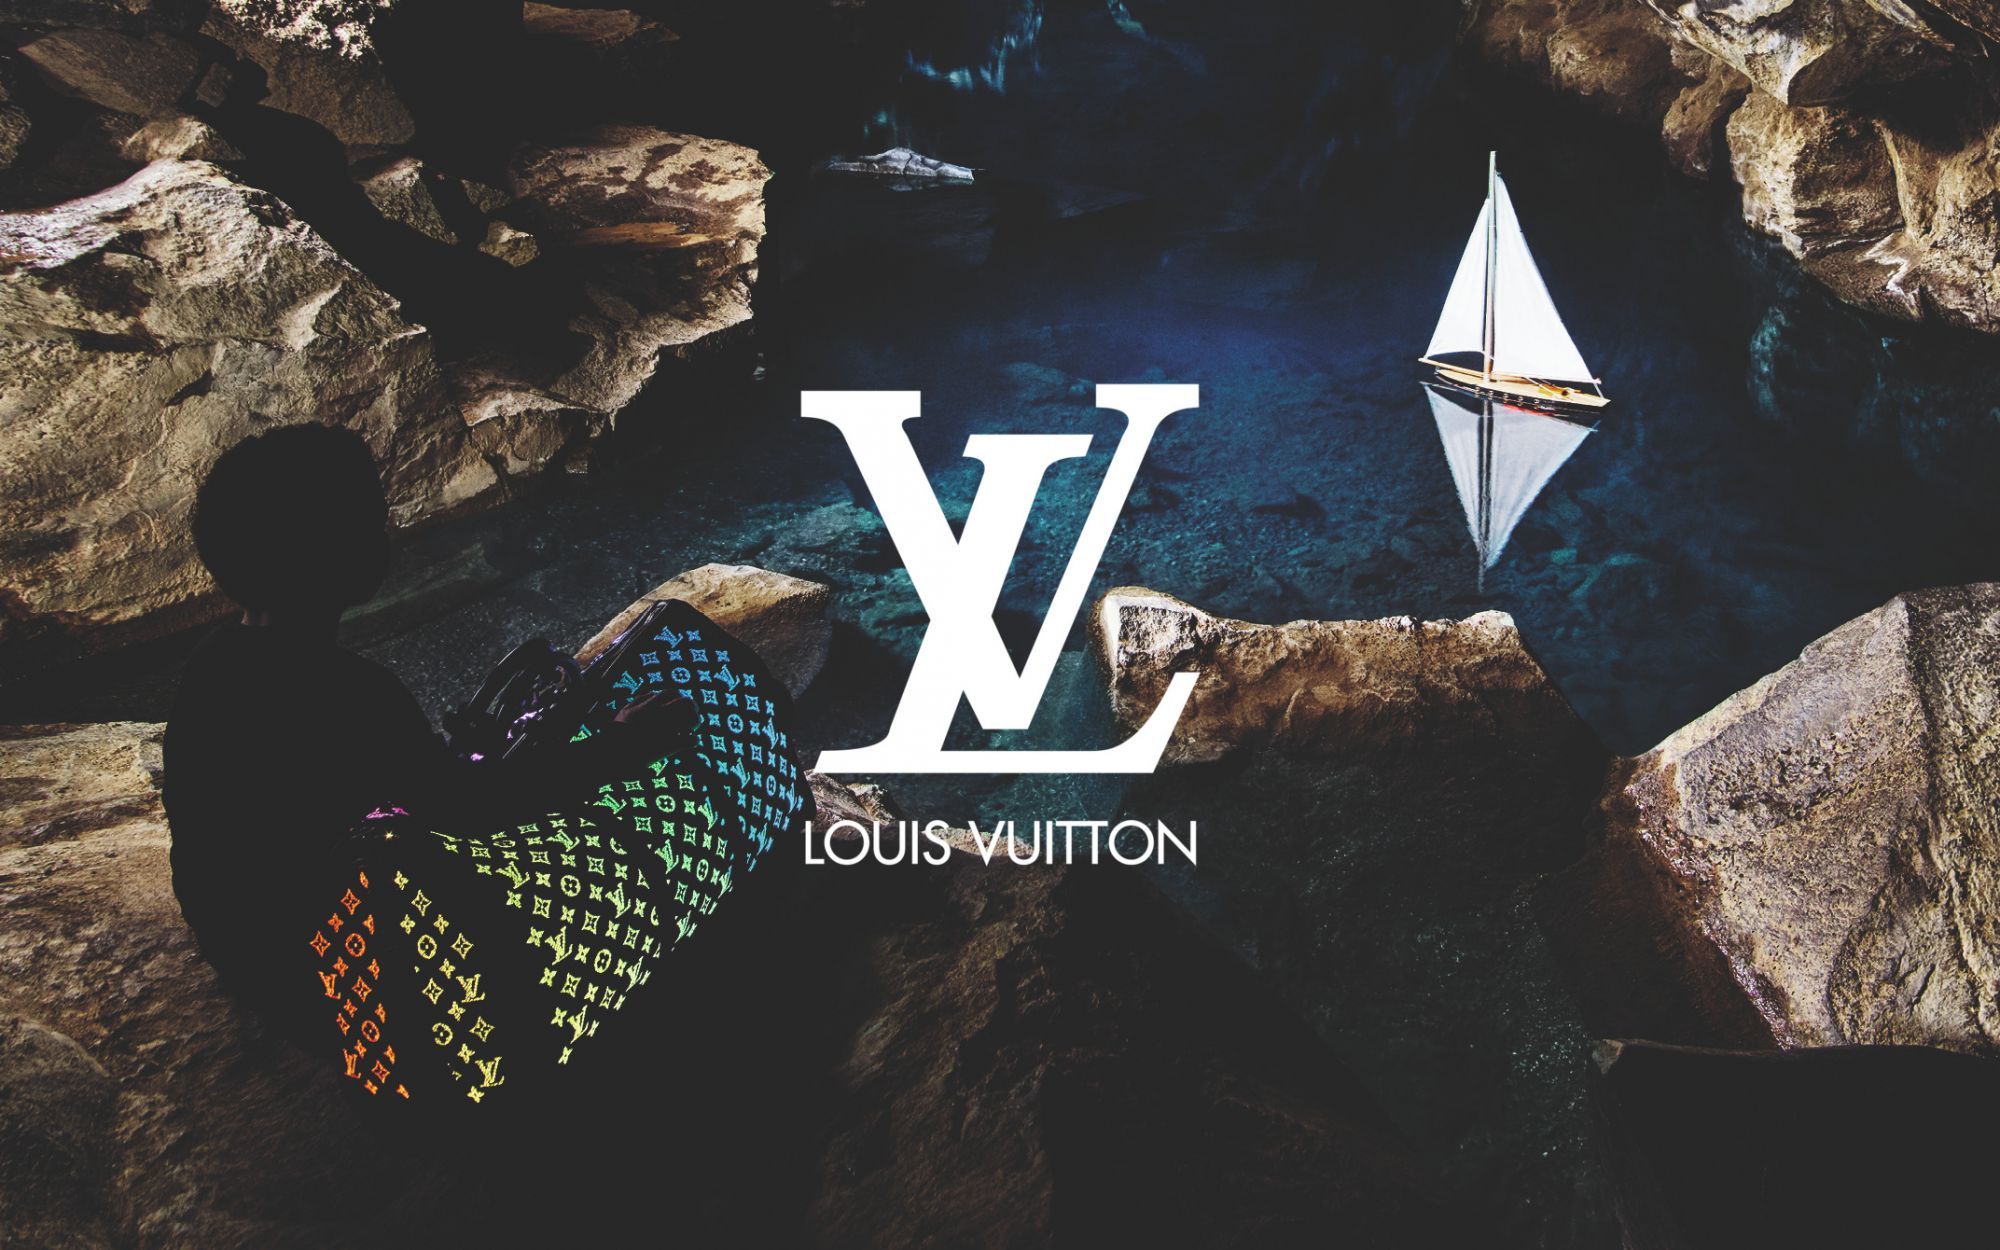 Louis Vuitton SS20 Viviane Sassen - Be Good Studios